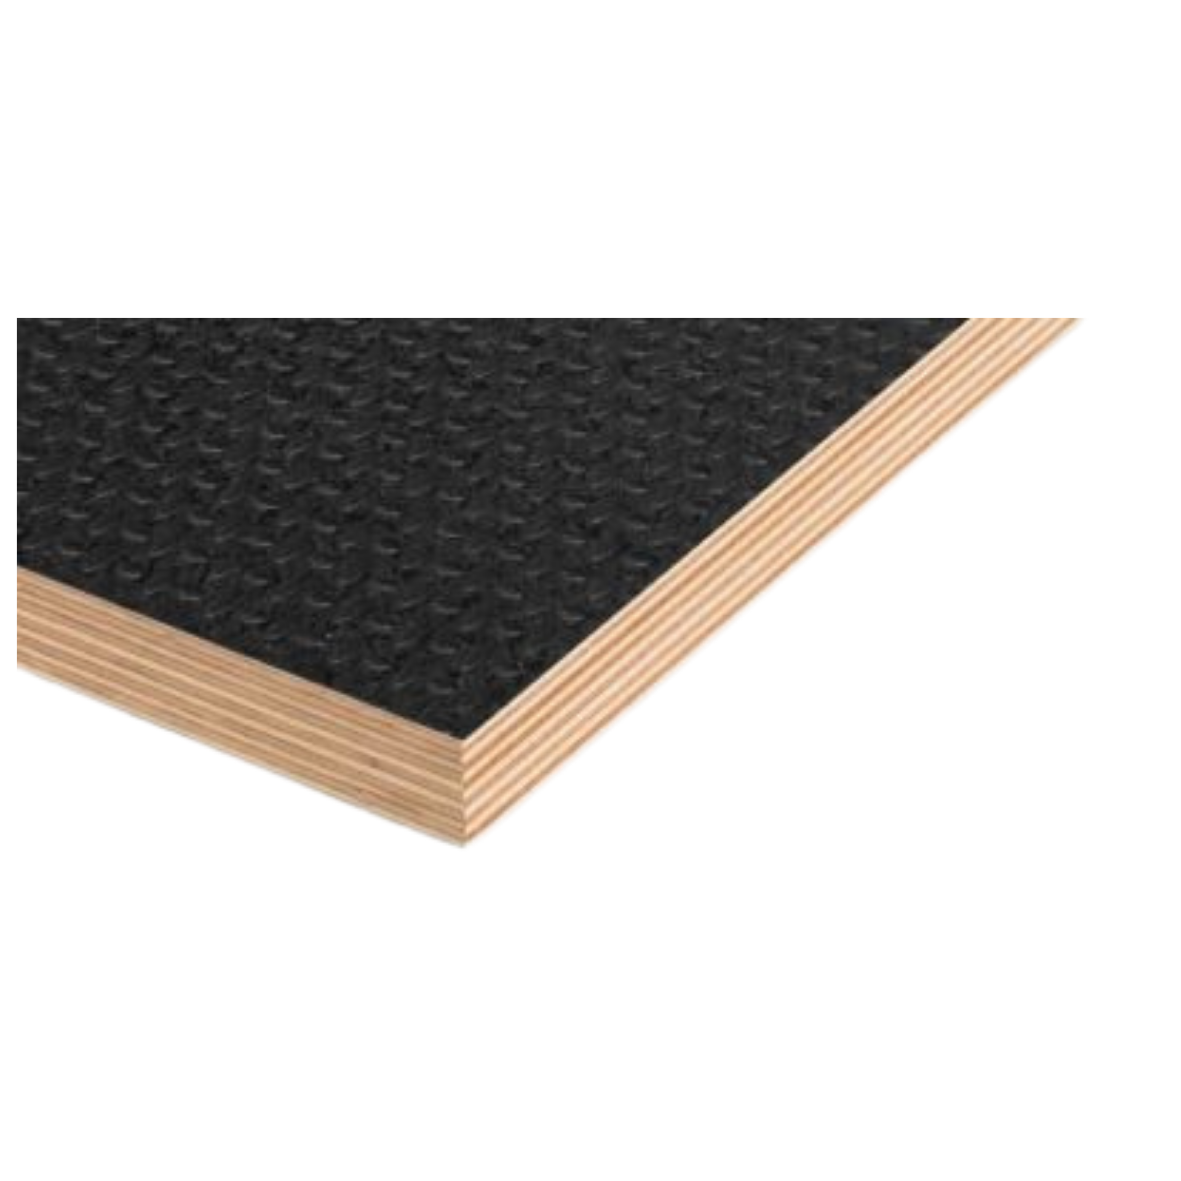 Antiskid playwood - Anti-slip TEGO formwork plywood 18 mm thickness, 1250 x 2500 mm class A, https:maxbau.ro